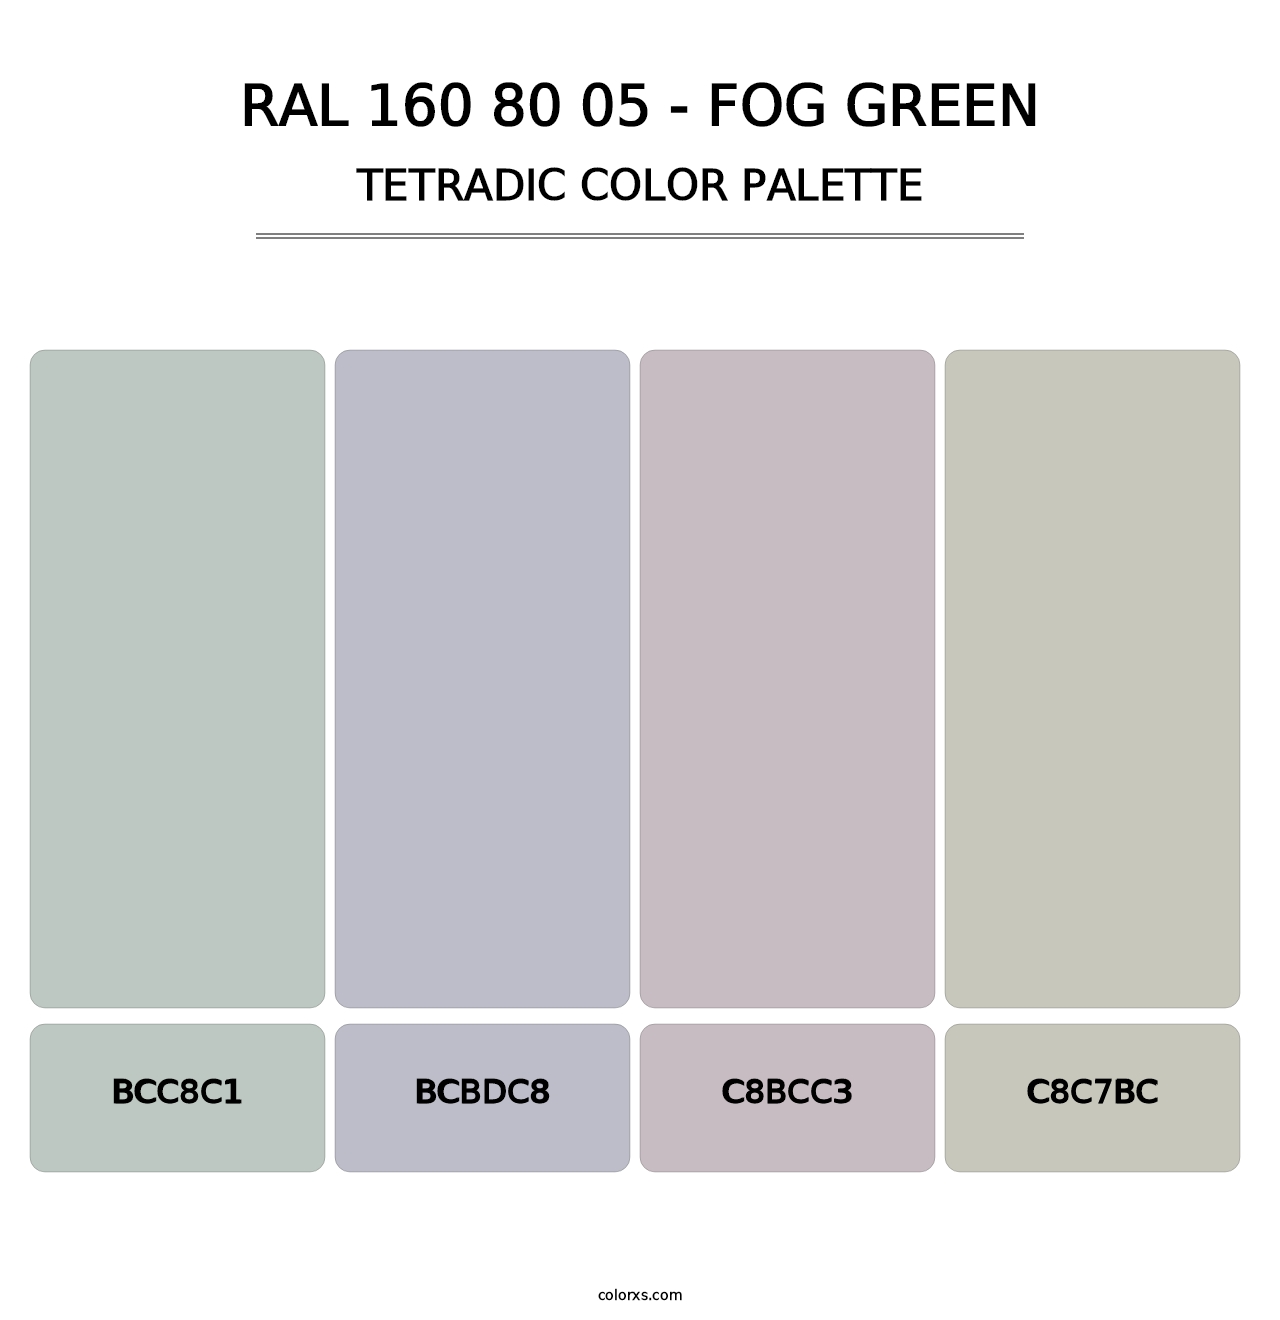 RAL 160 80 05 - Fog Green - Tetradic Color Palette